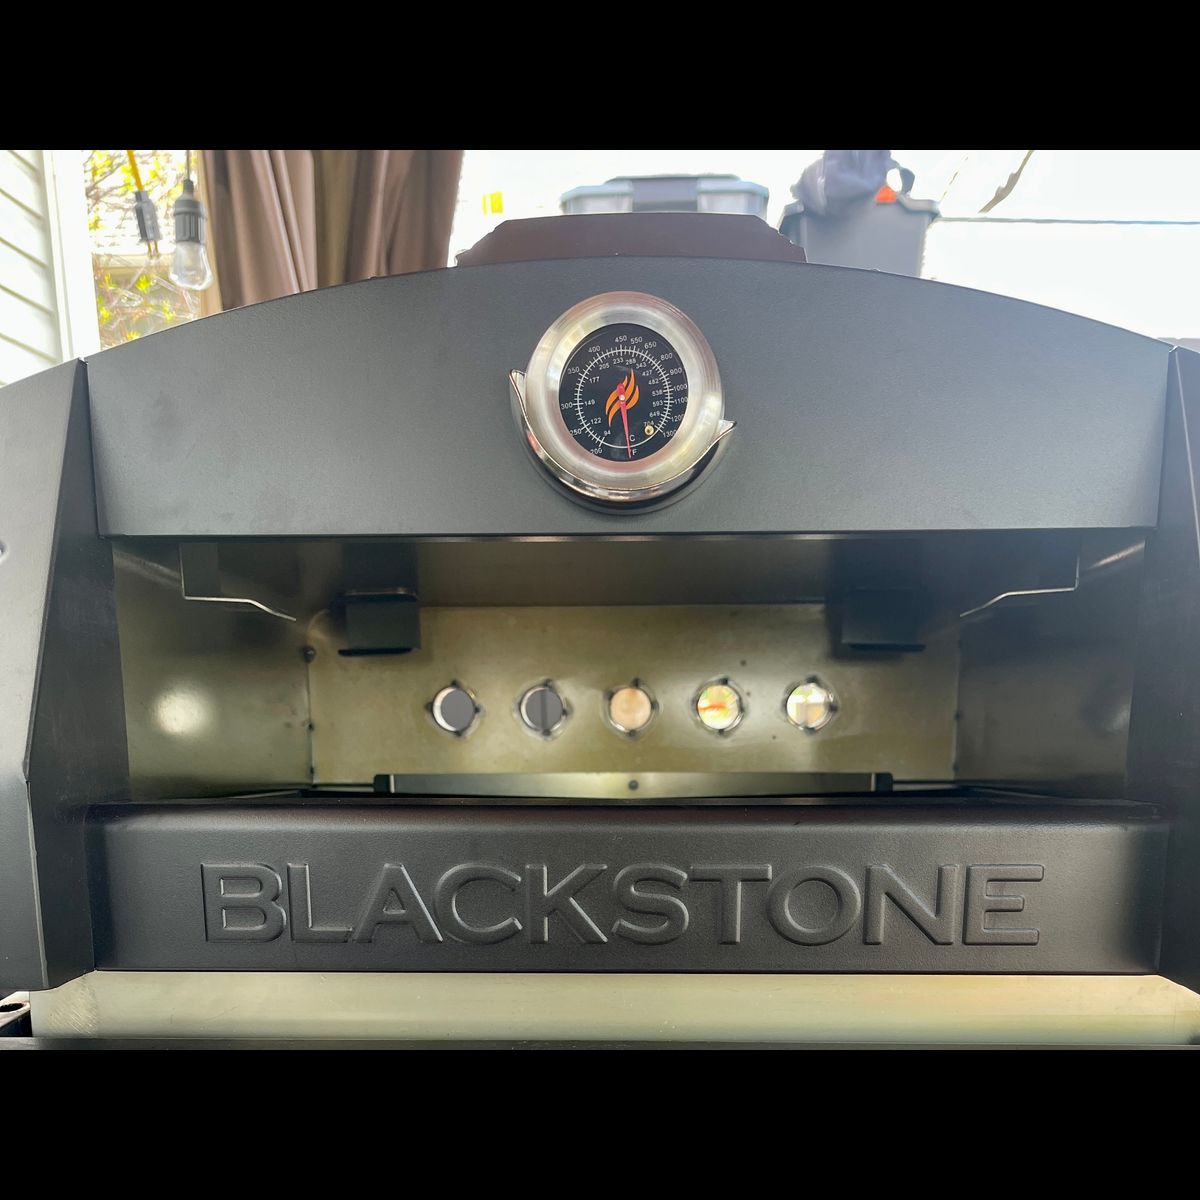 The inside of Blackstone pizza oven insert.